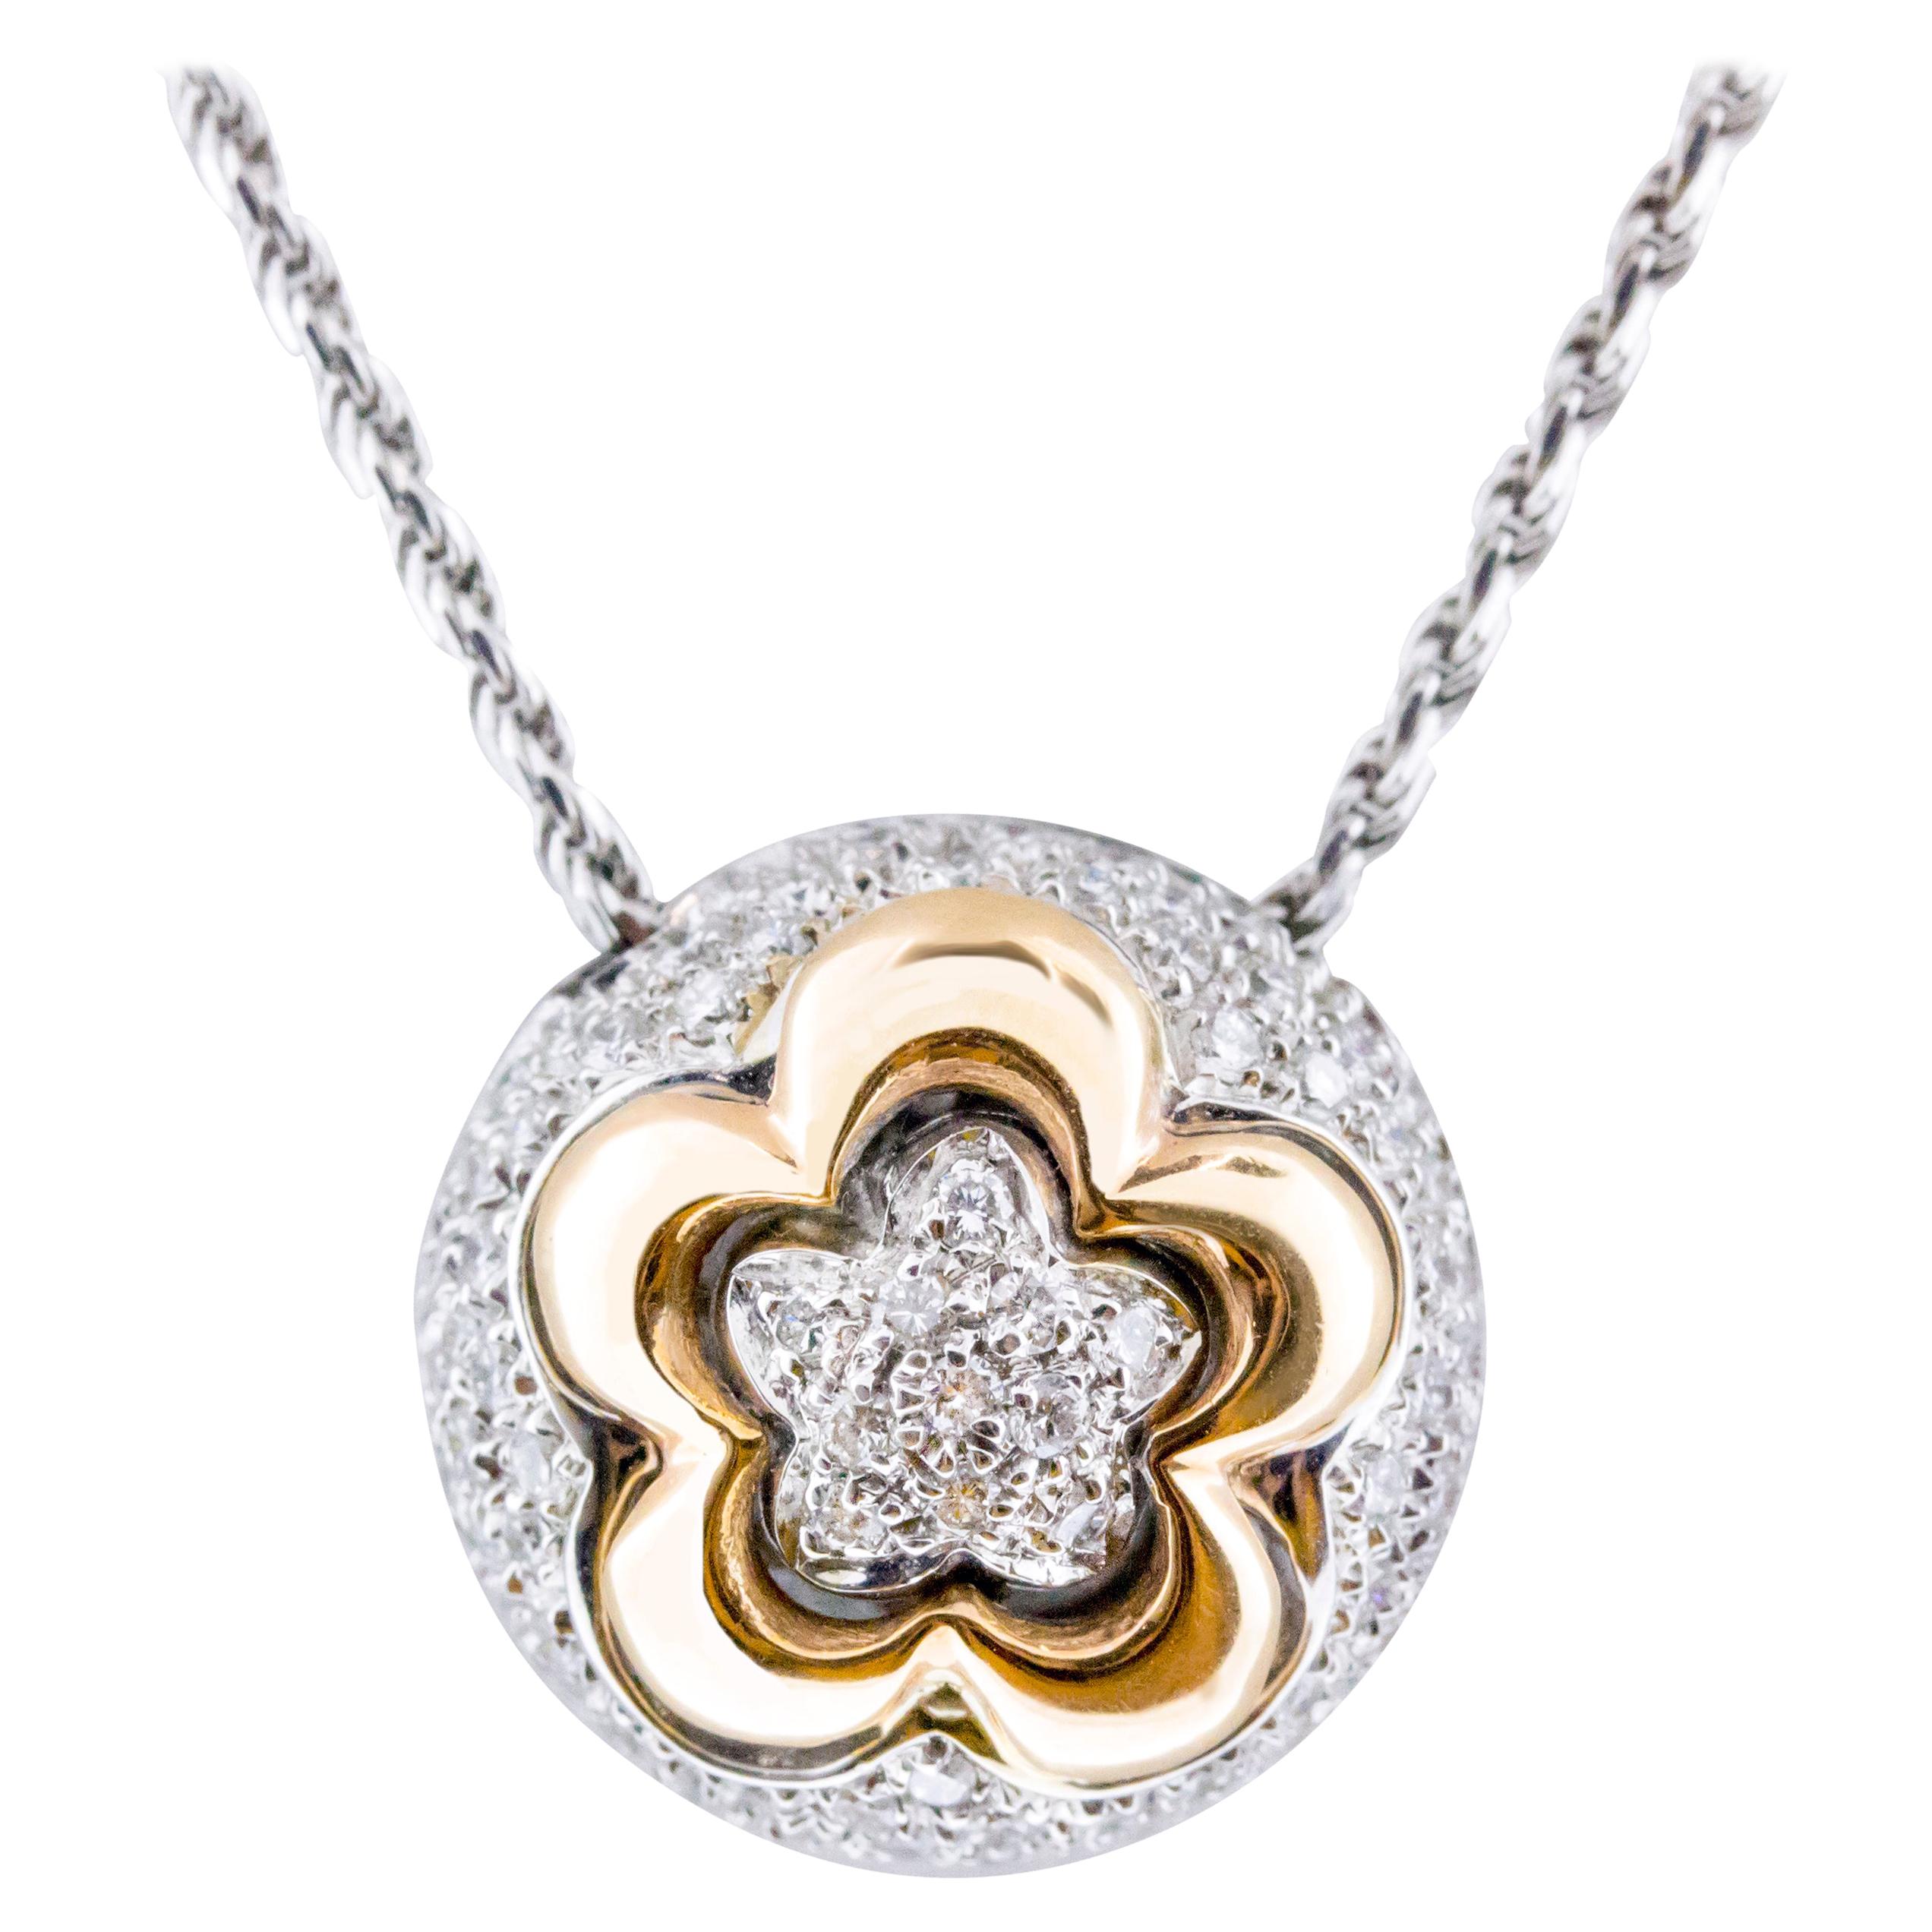 18 Karat Rose and White Gold Flower Pendant Necklace